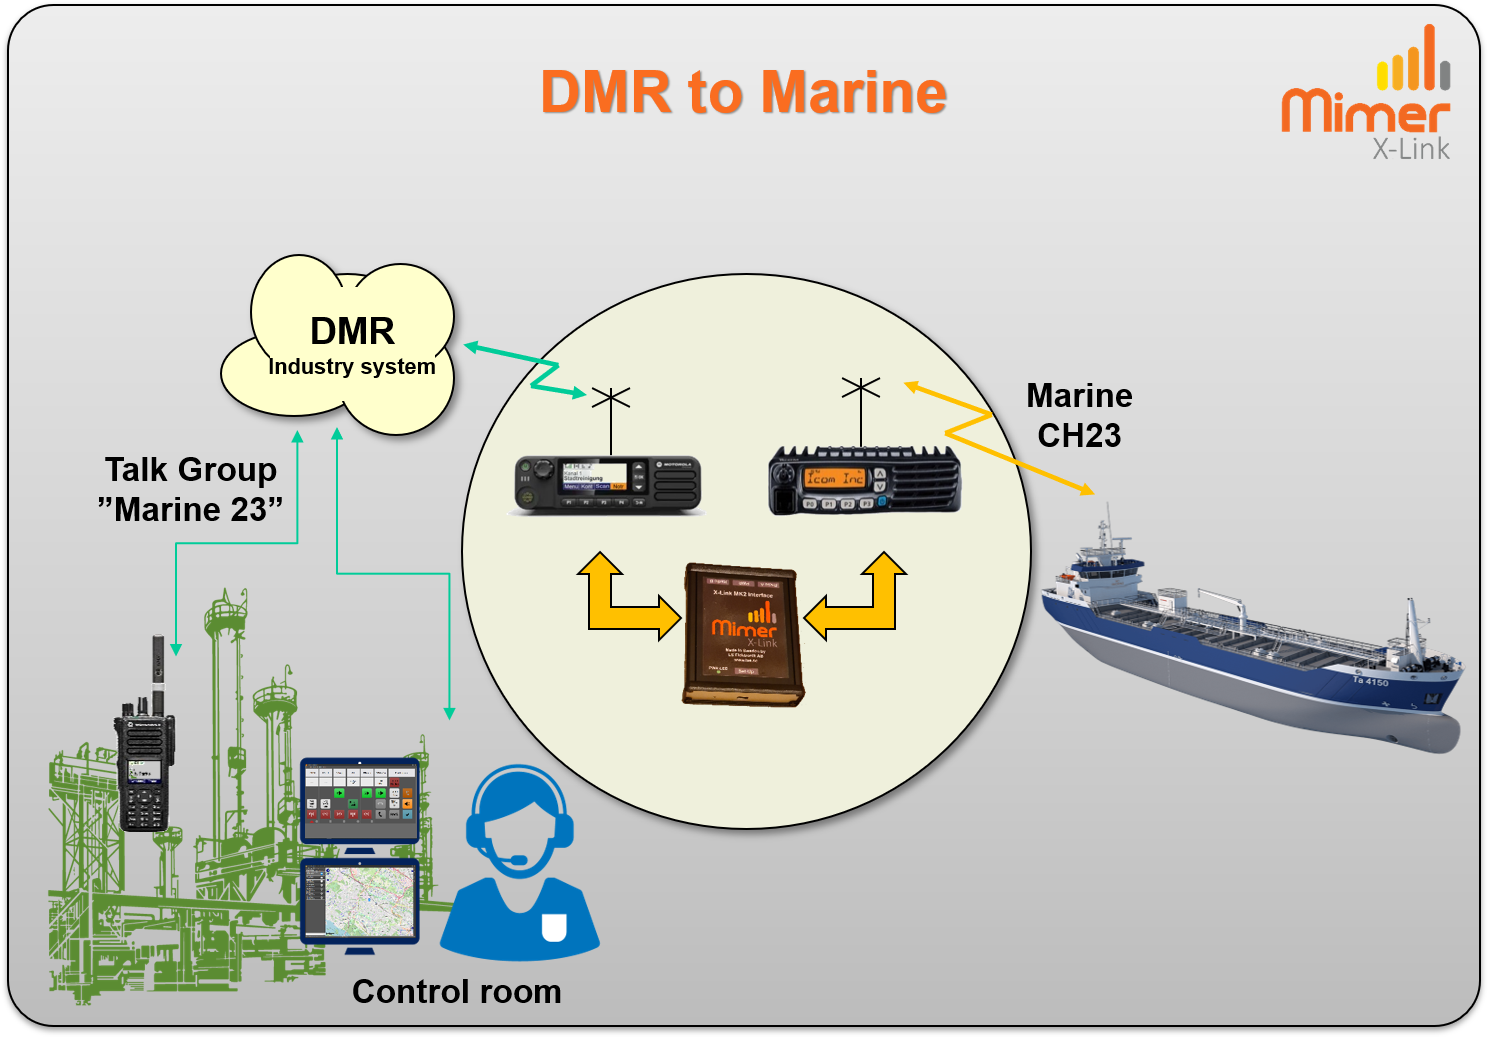 X-Link DMR to Marine